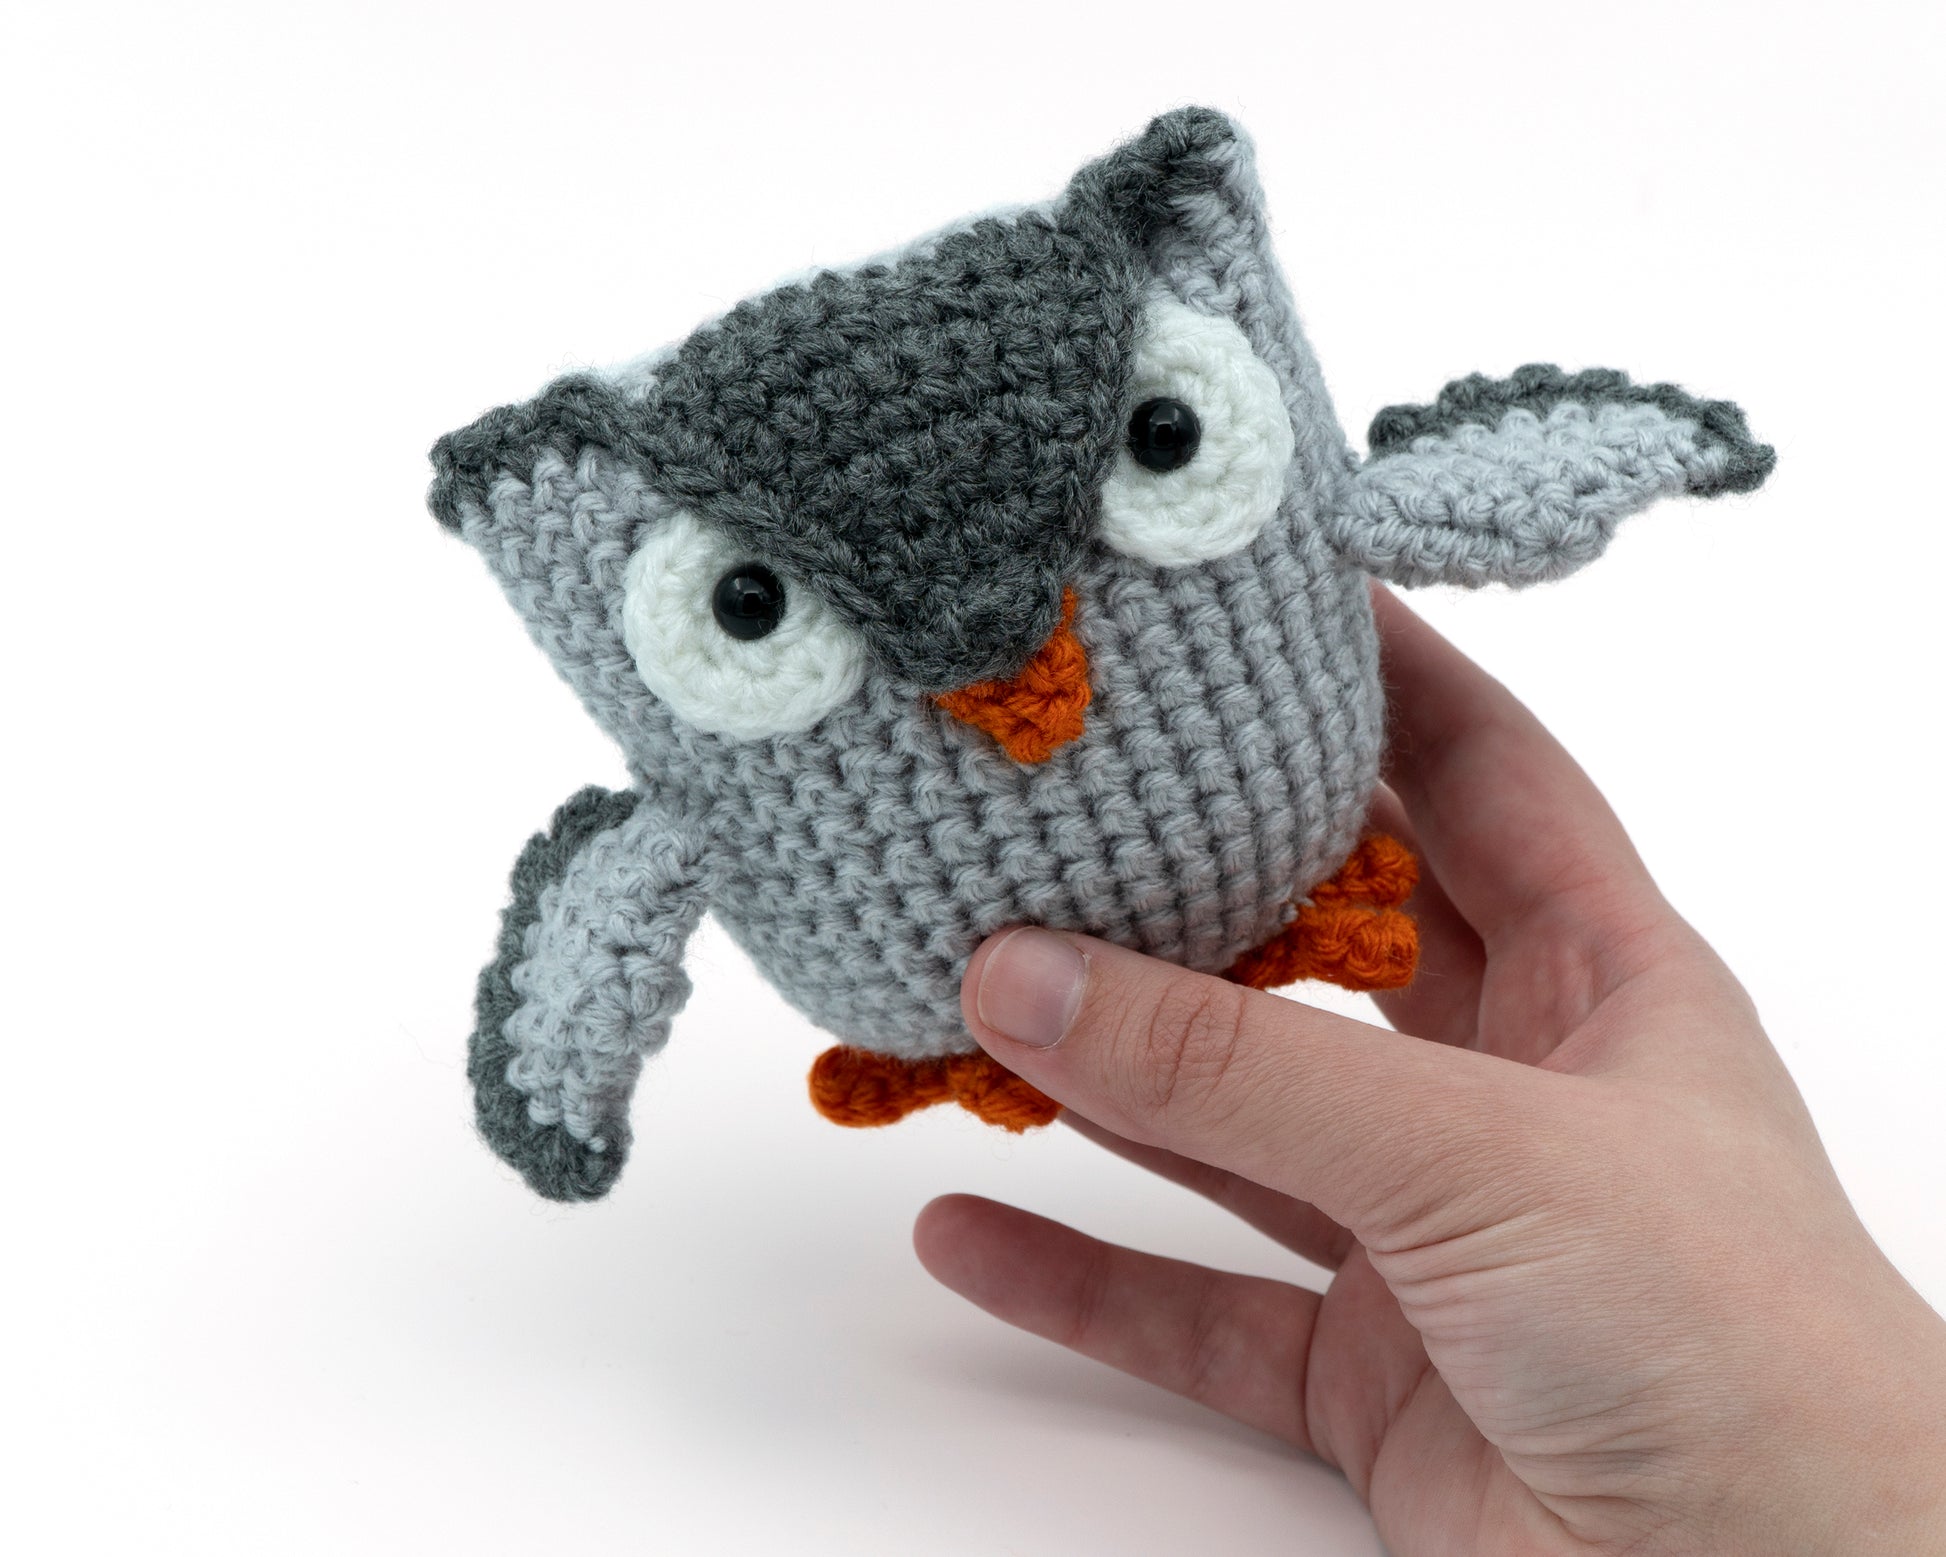 amigurumi crochet owl pattern in hand for size comparison